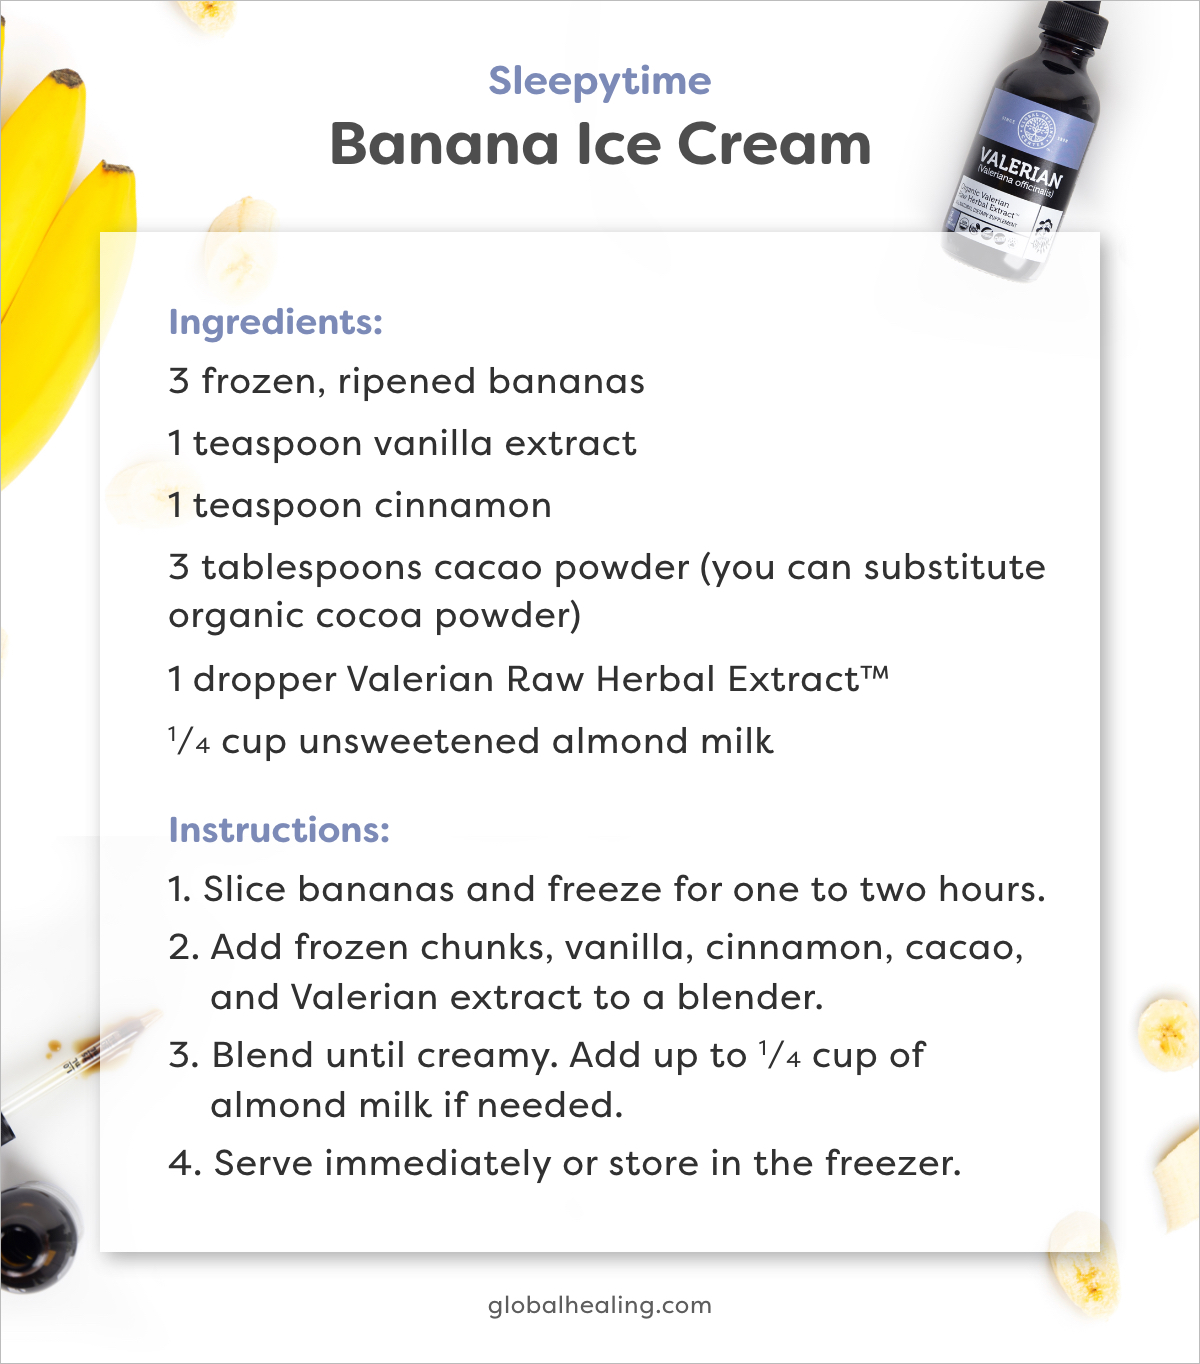 Sleepytime Banana Ice Cream recipe card.